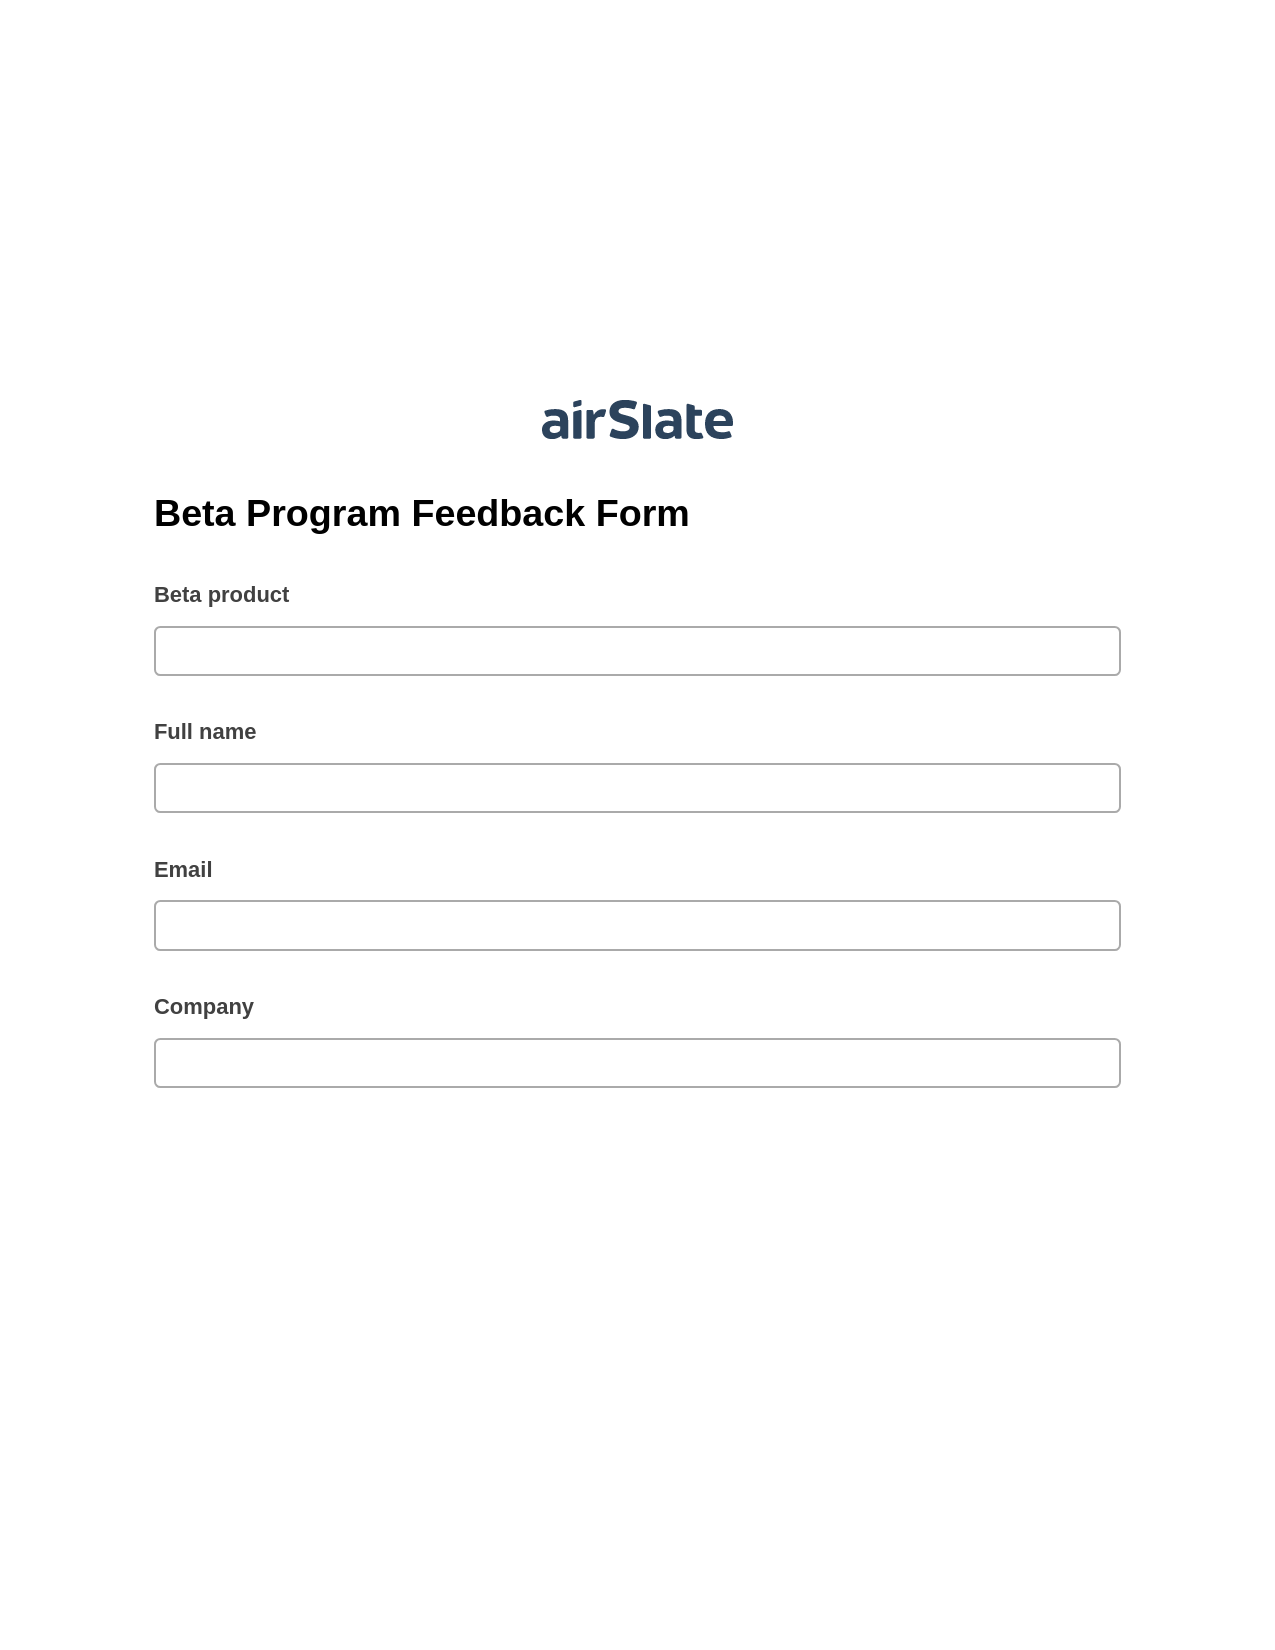 Multirole Beta Program Feedback Form Pre-fill from Salesforce Record Bot, Create slate addon, Slack Notification Postfinish Bot